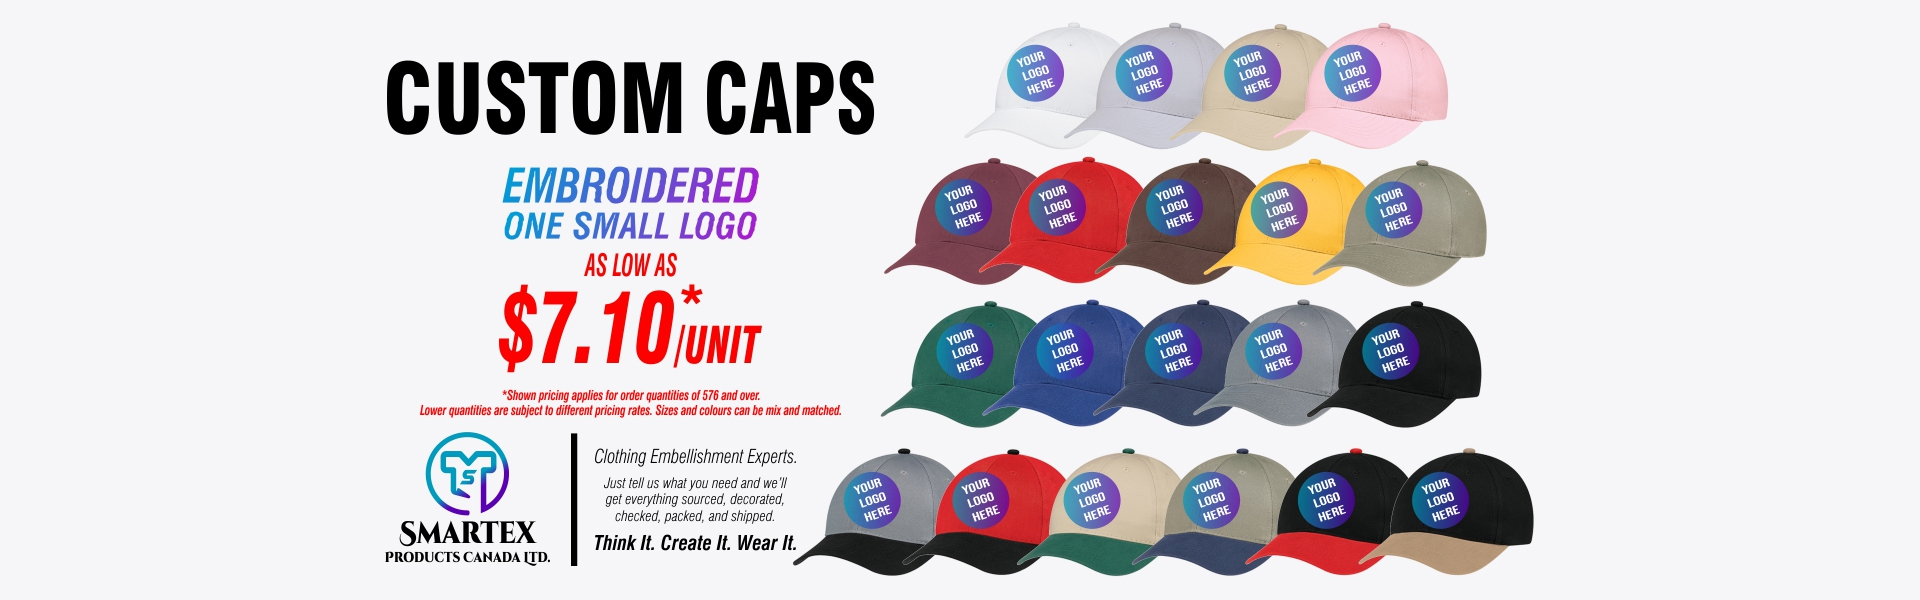 Specials Custom Caps